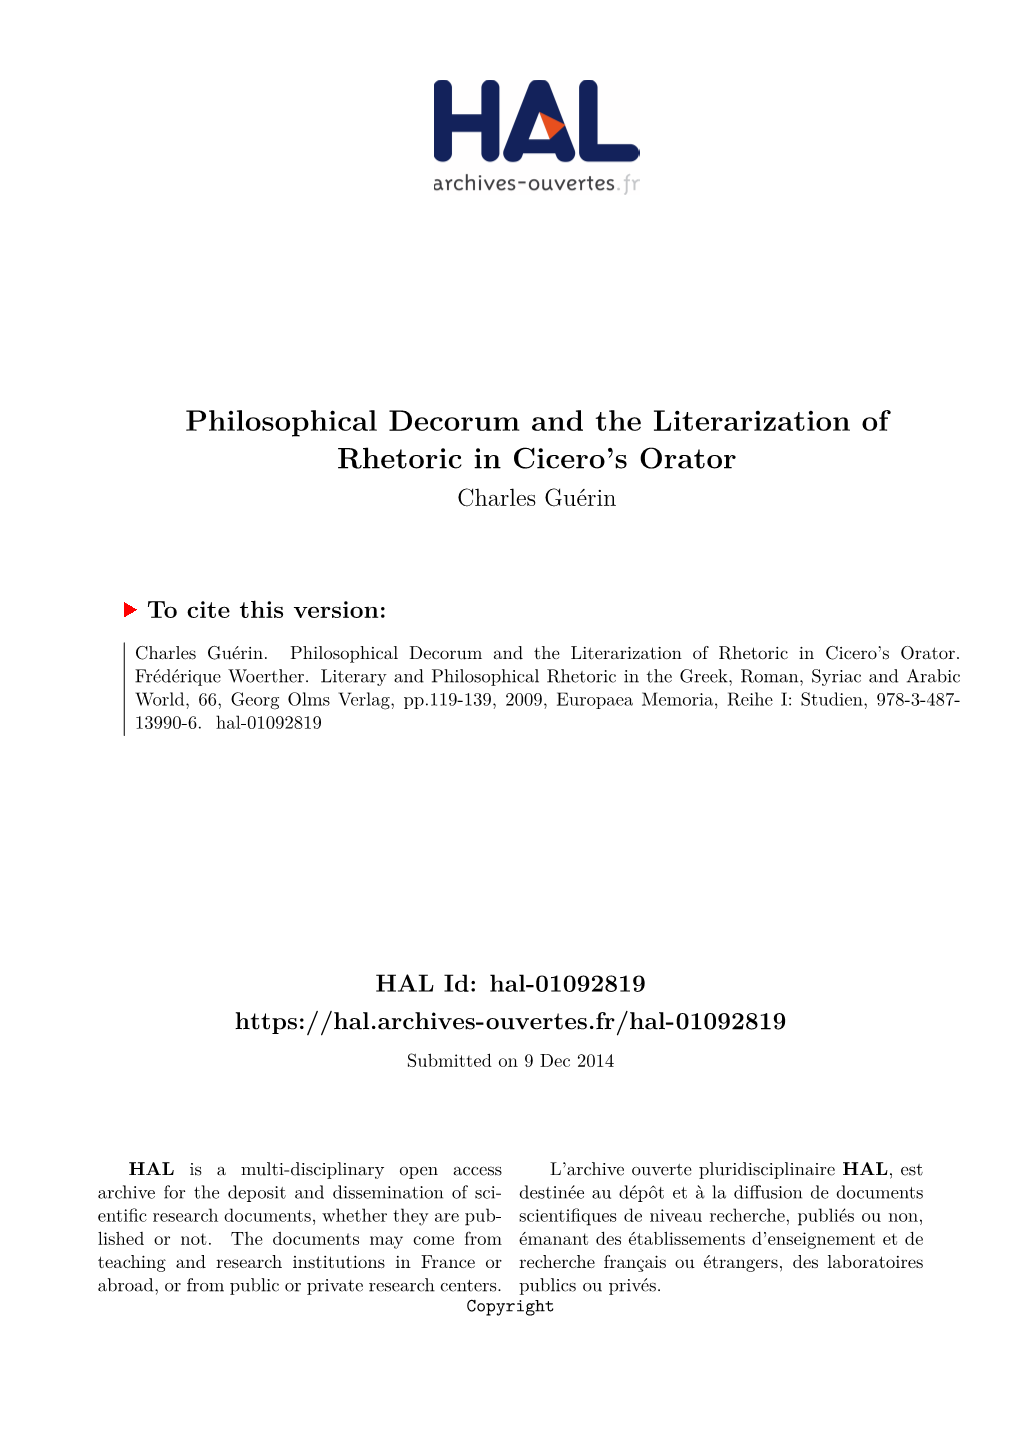 Philosophical Decorum and the Literarization of Rhetoric in Cicero's Orator